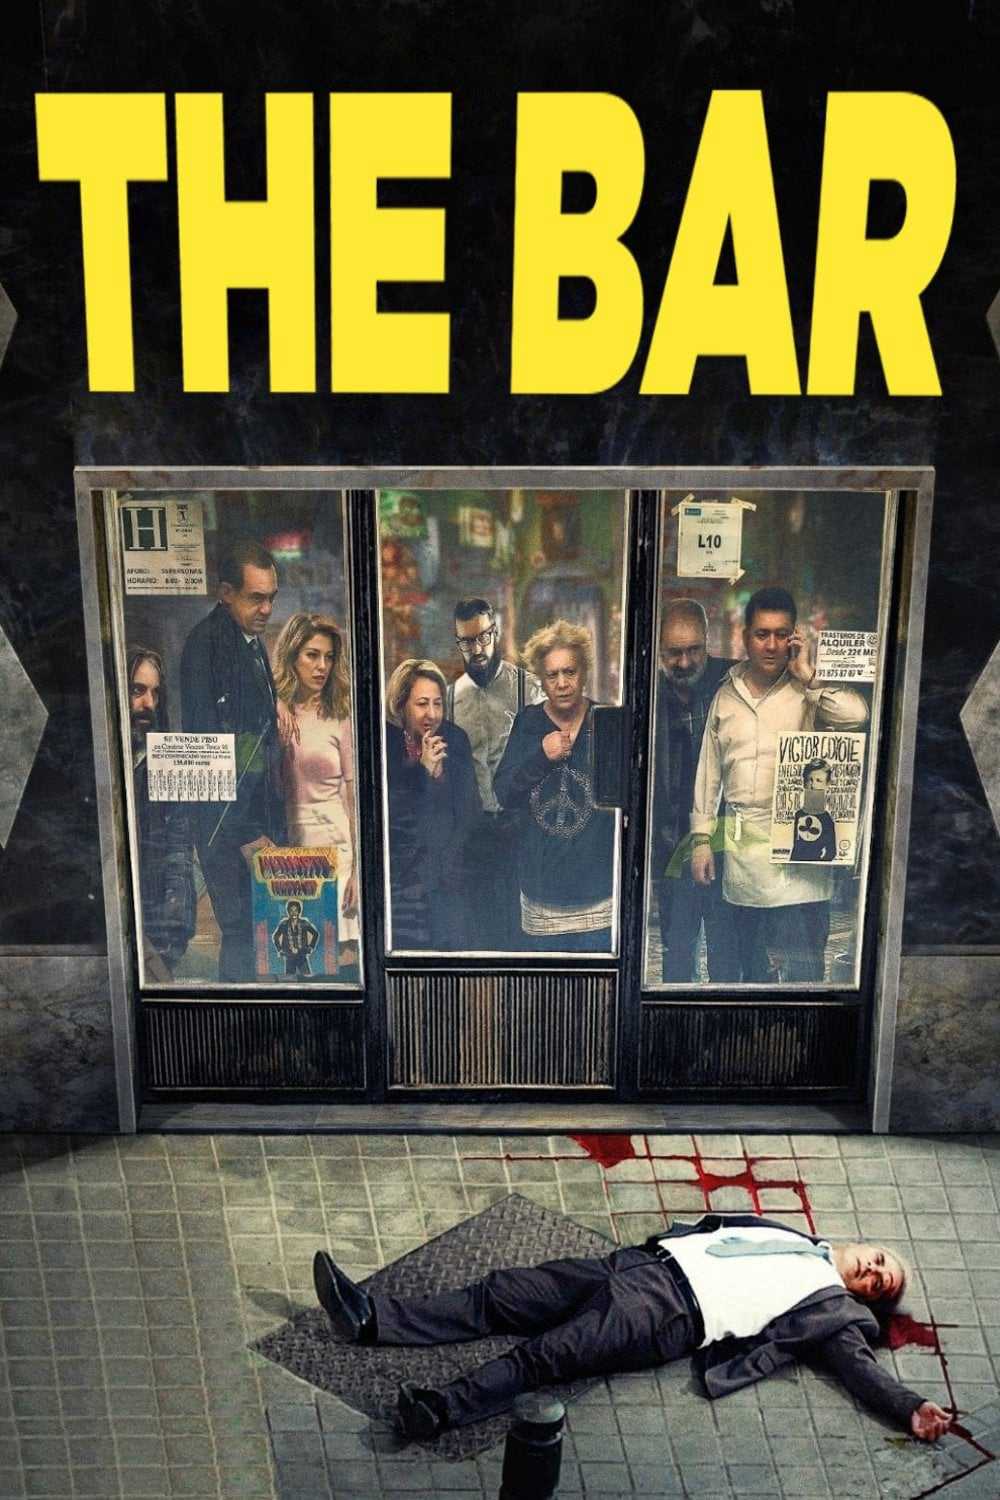 The bar - The bar